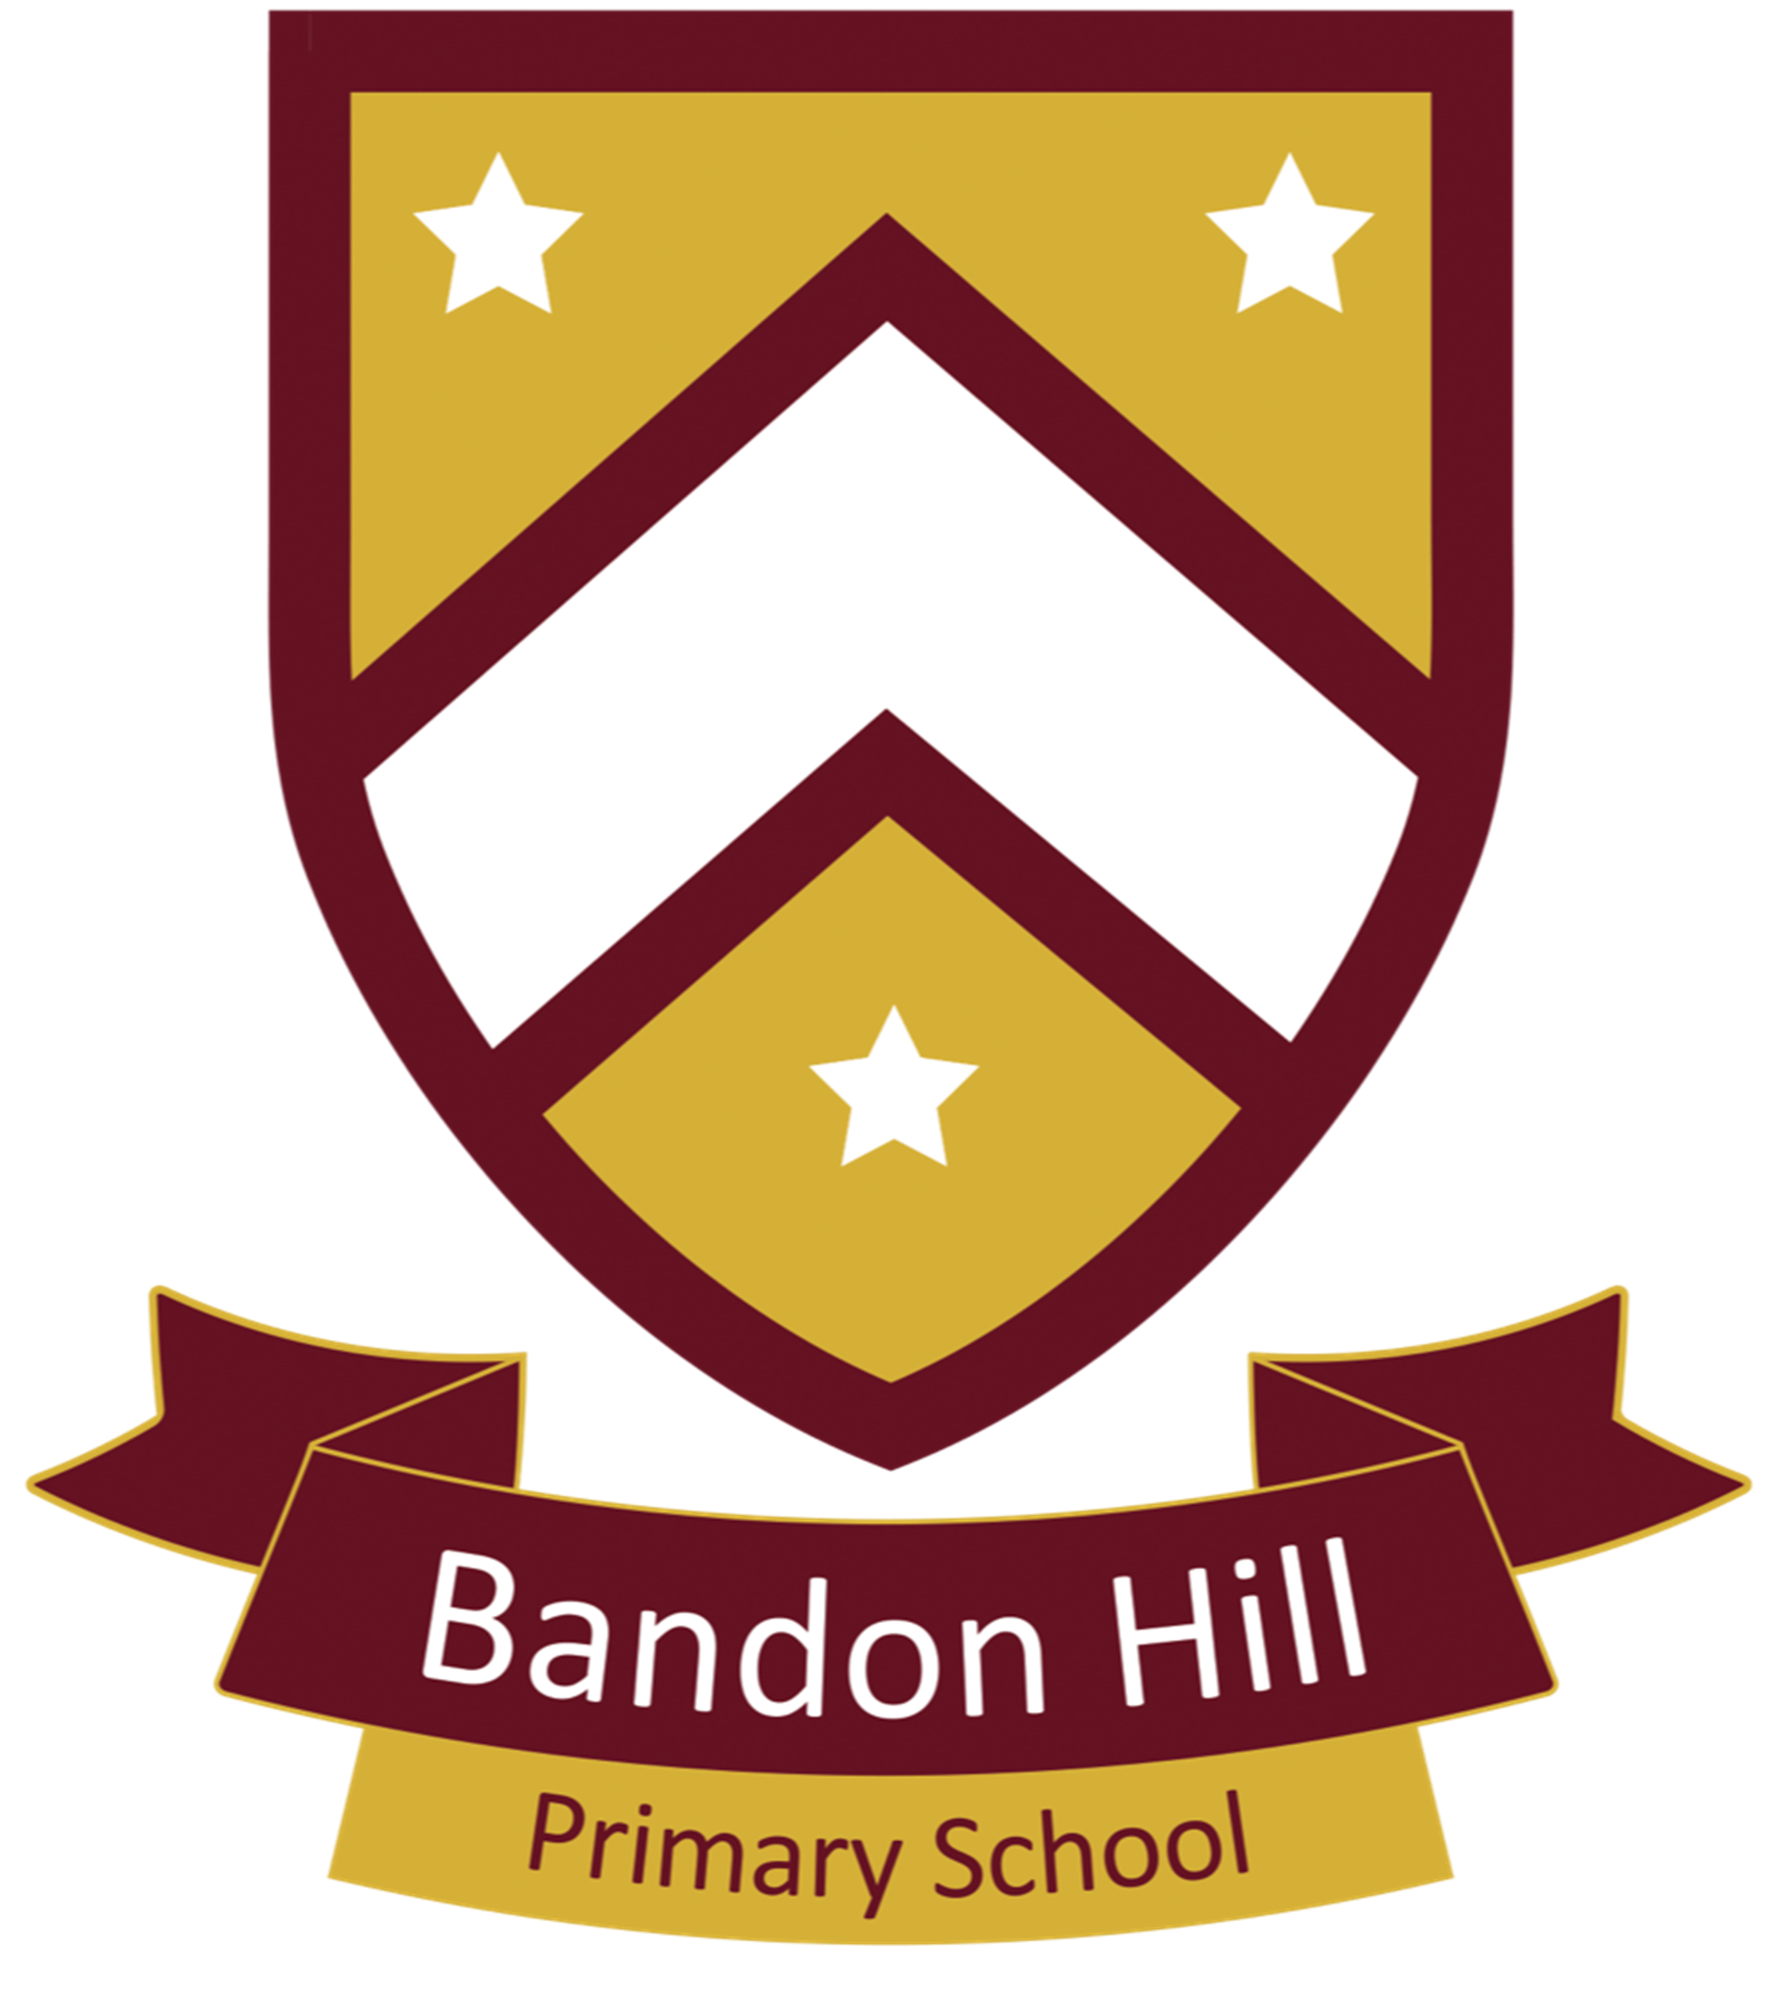 Bandon Hill Primary School